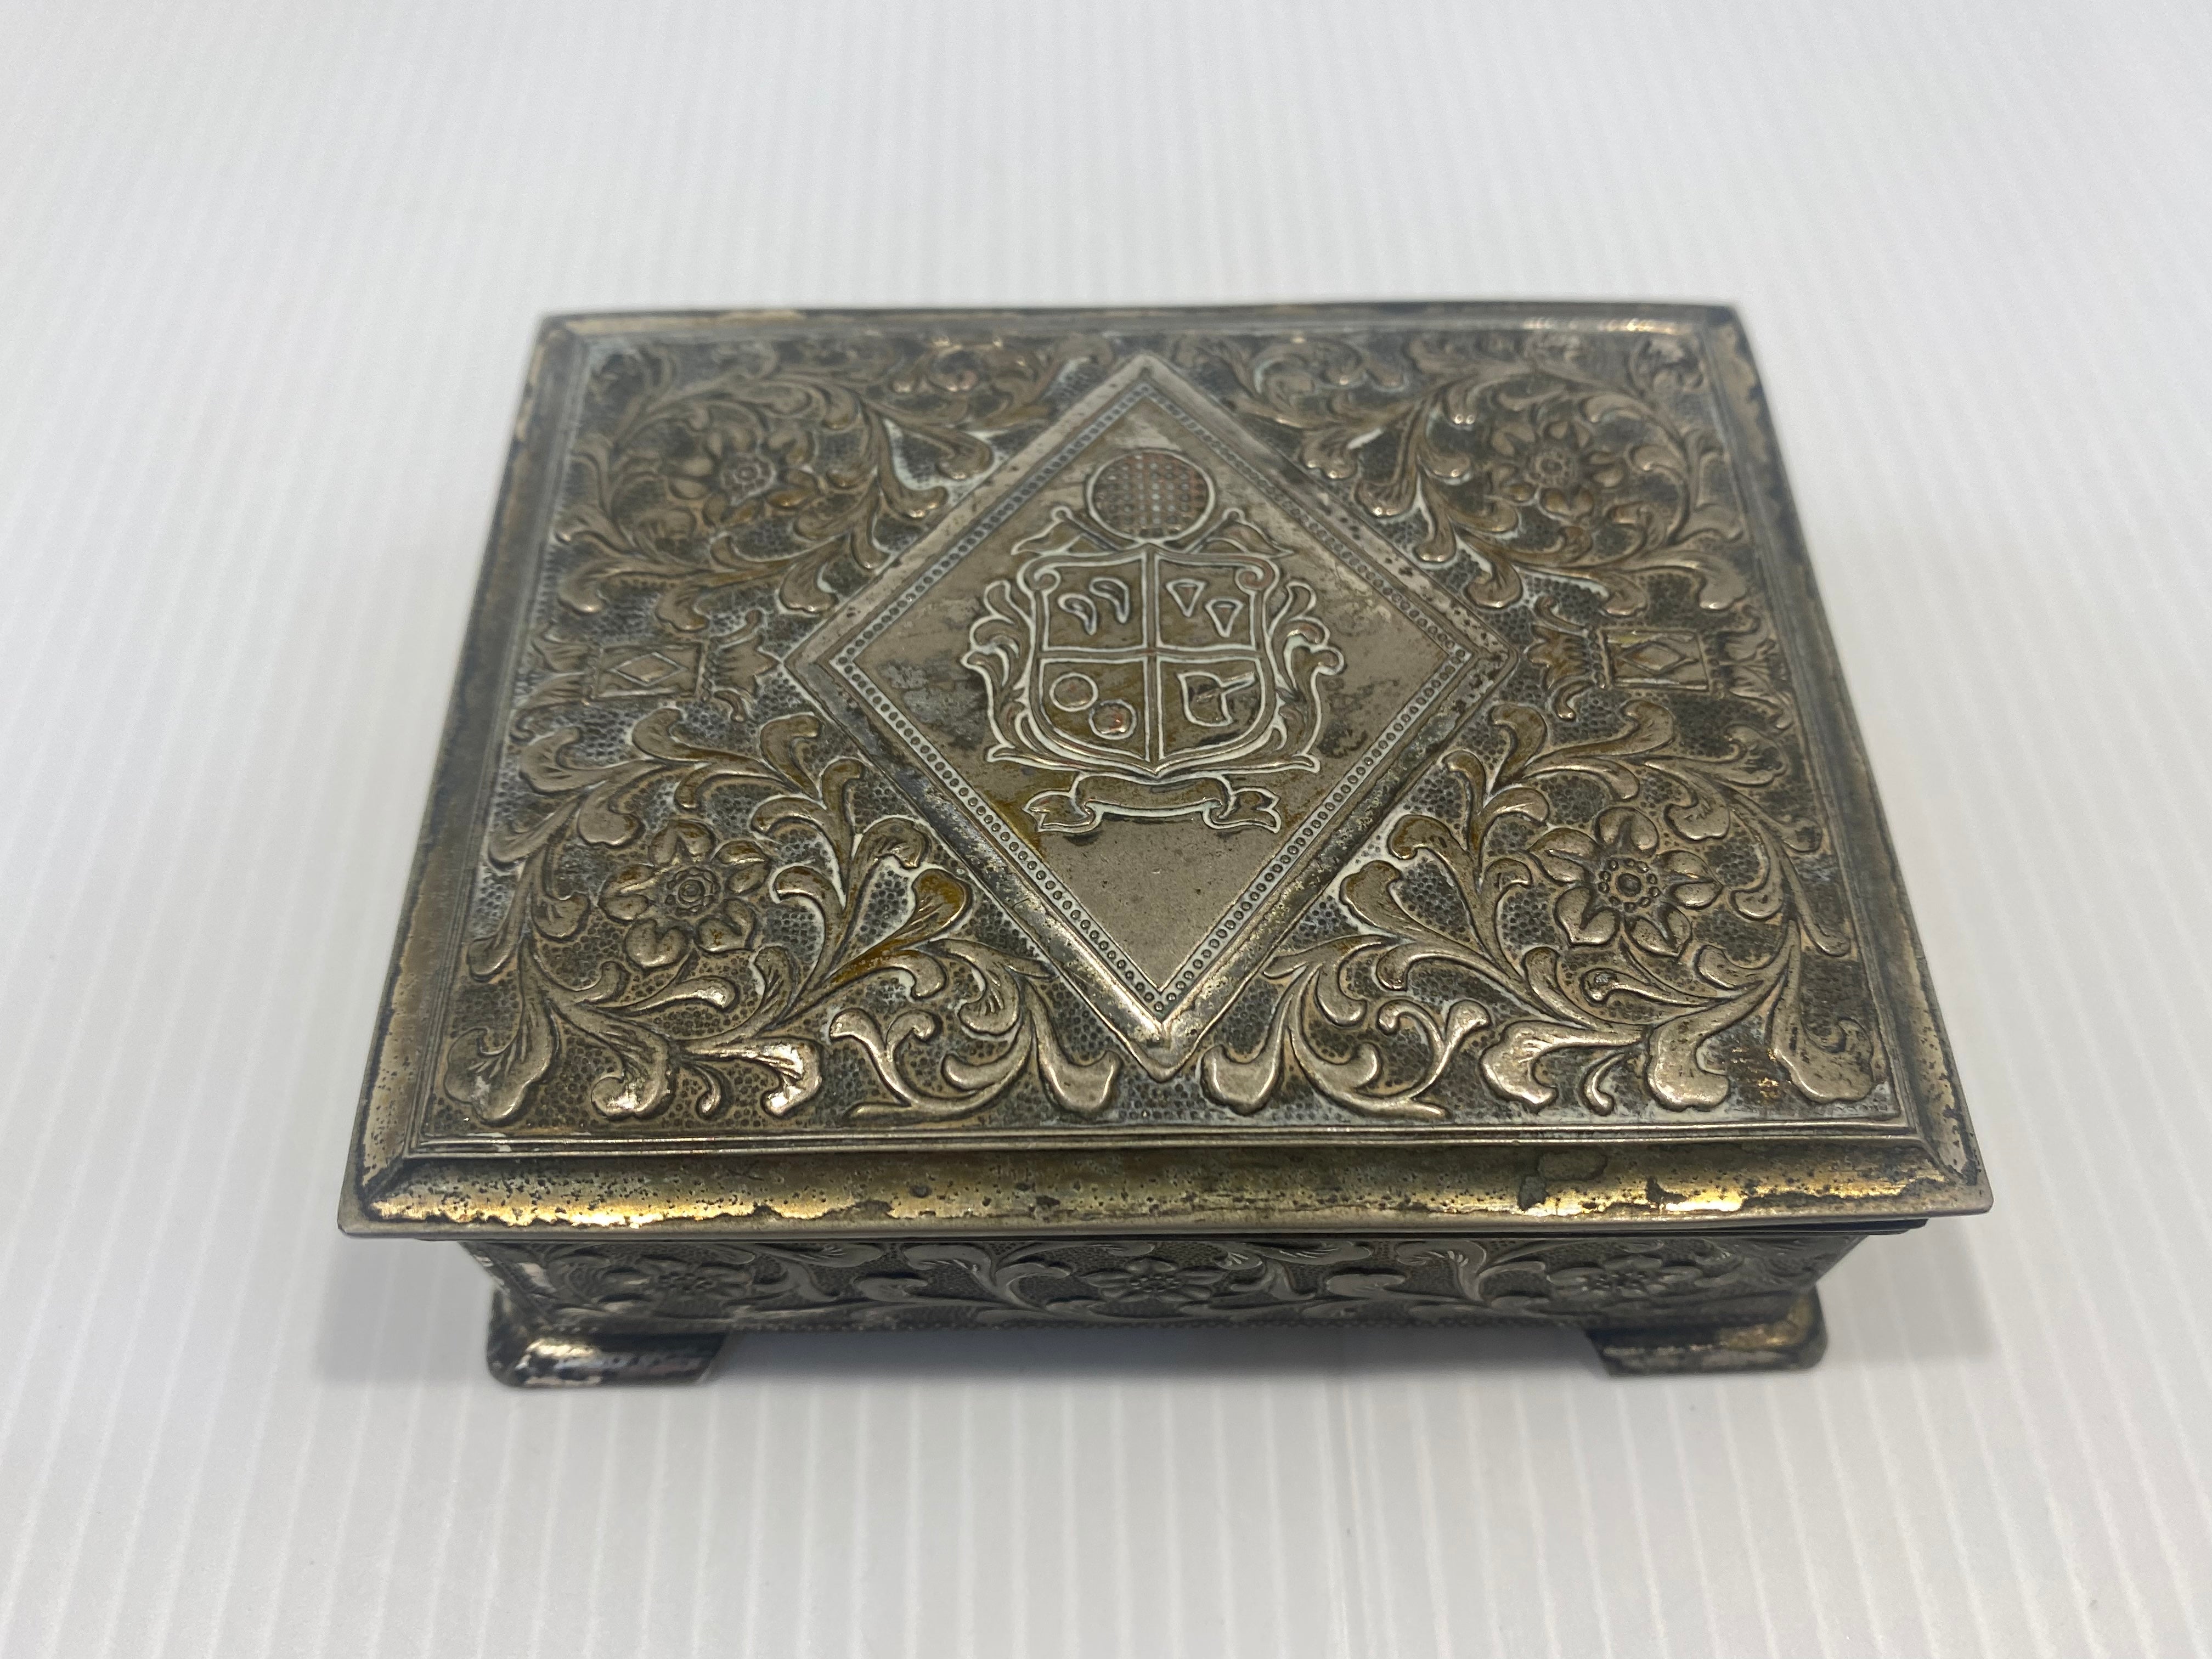 1950s cigarette box in silver pewter